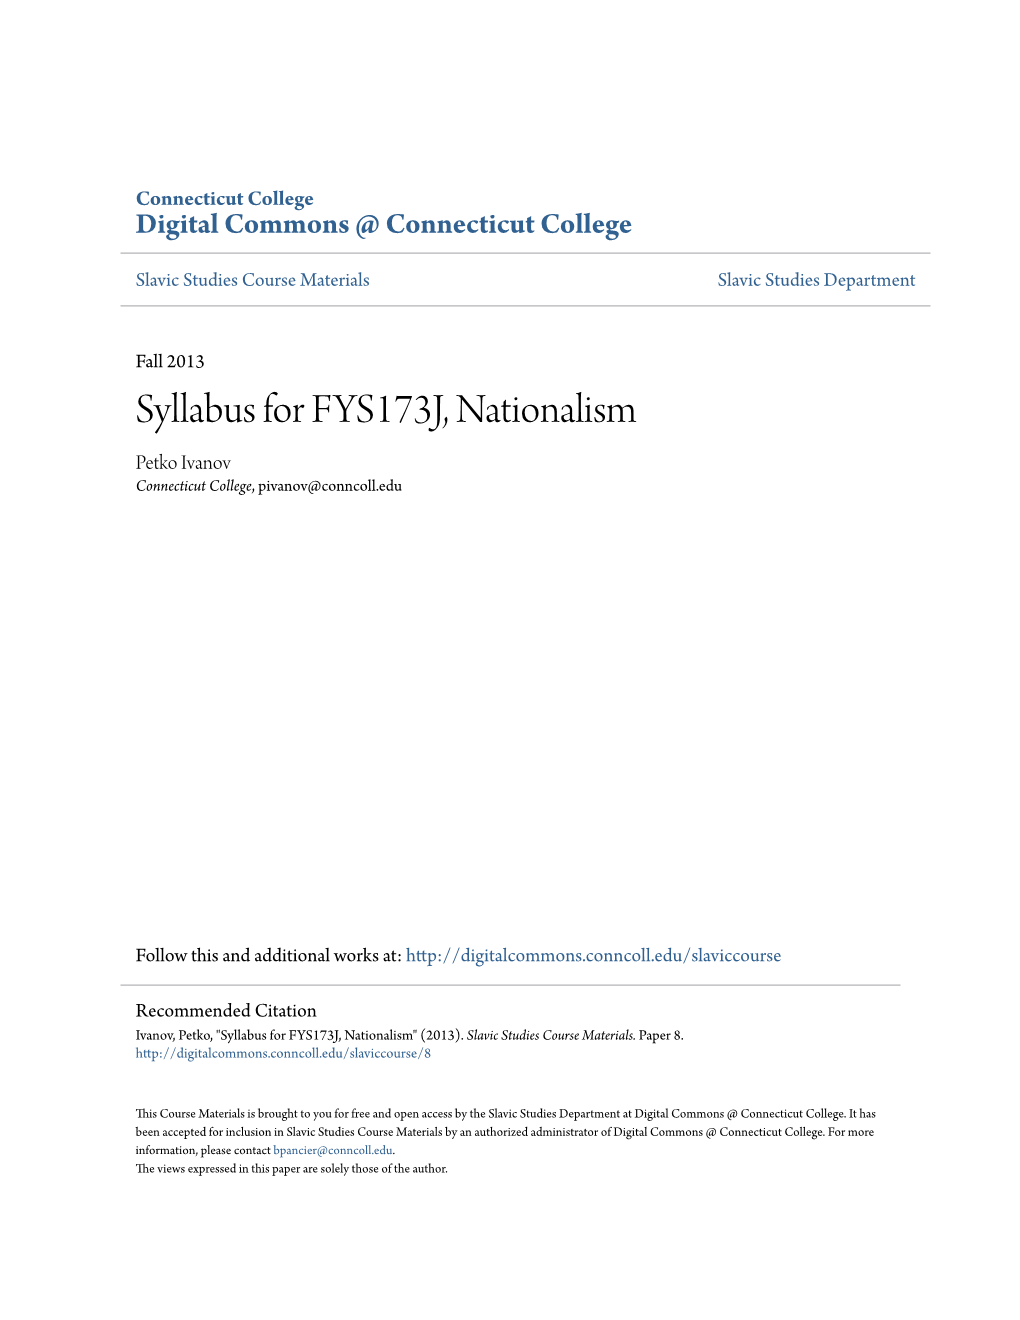 Syllabus for FYS173J, Nationalism Petko Ivanov Connecticut College, Pivanov@Conncoll.Edu